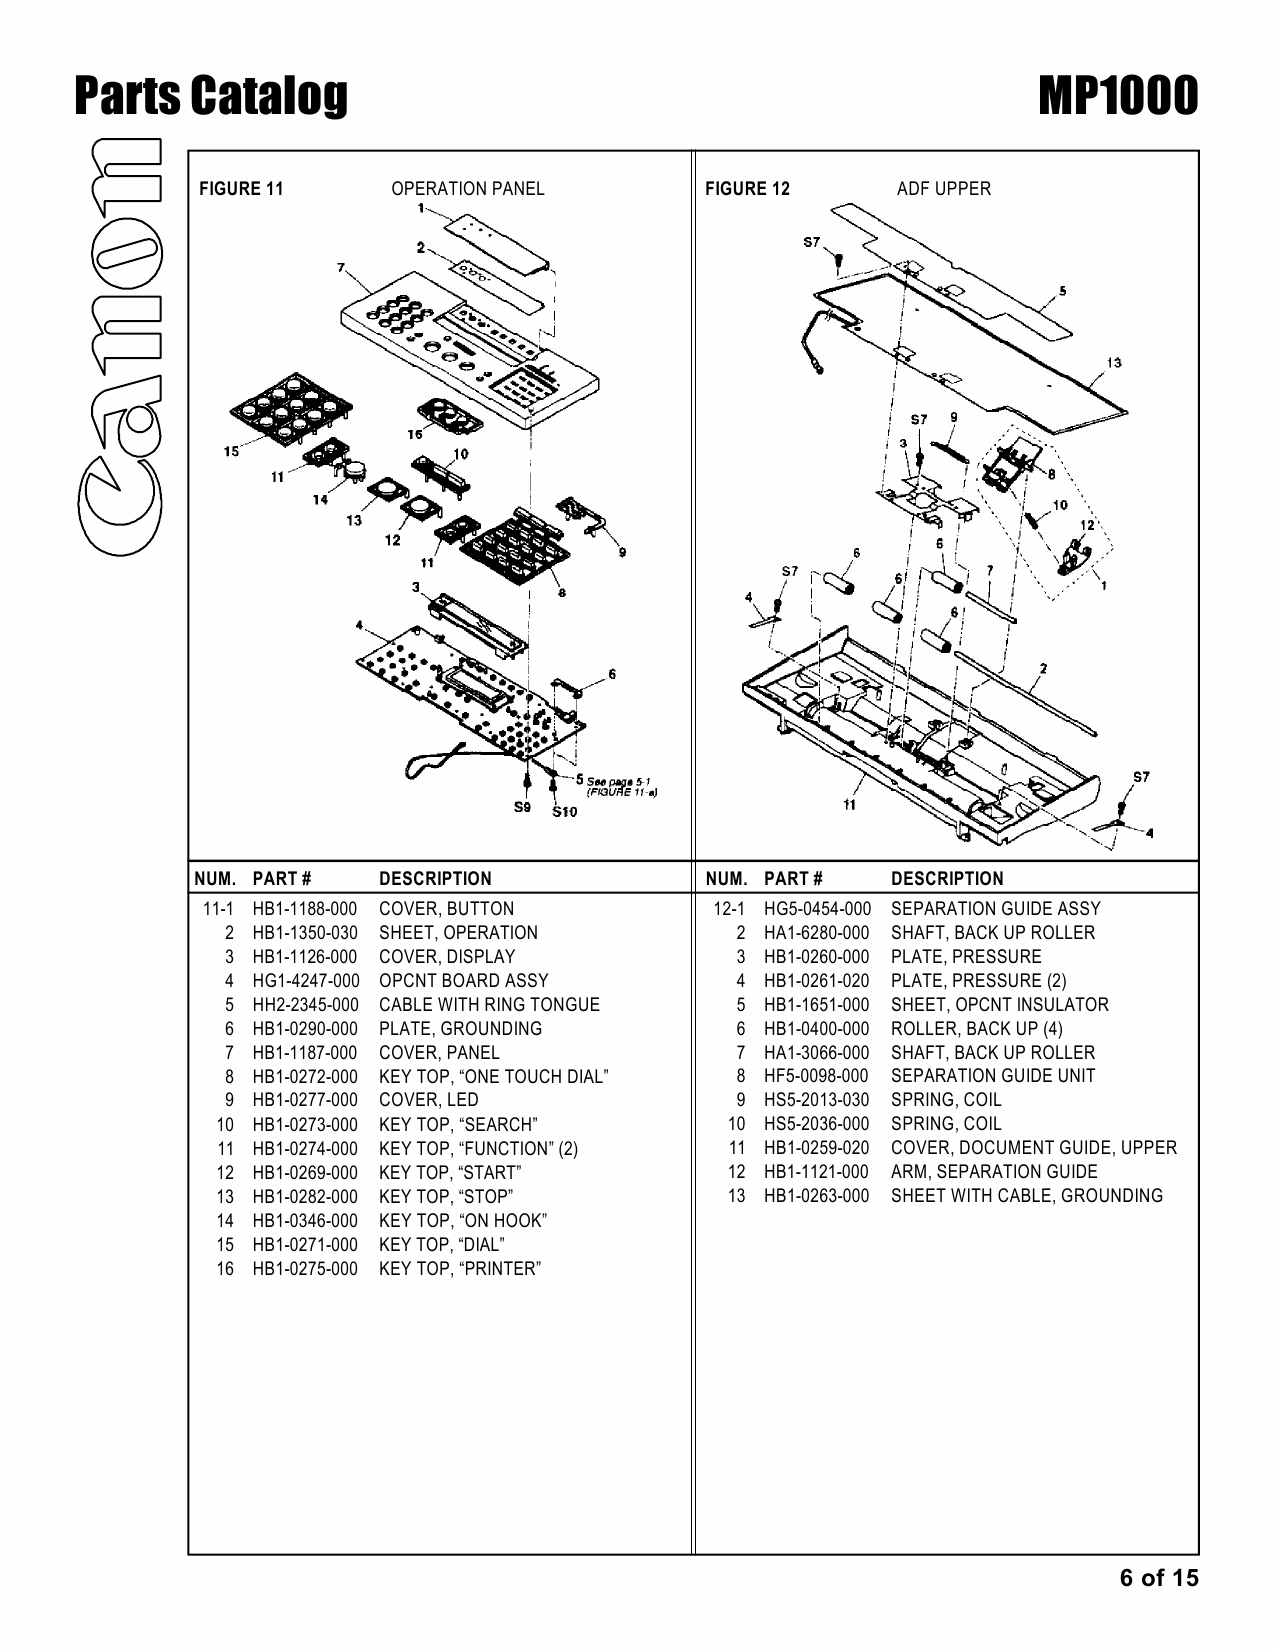 Canon MultiPASS MP-1000 Parts Catalog Manual-6